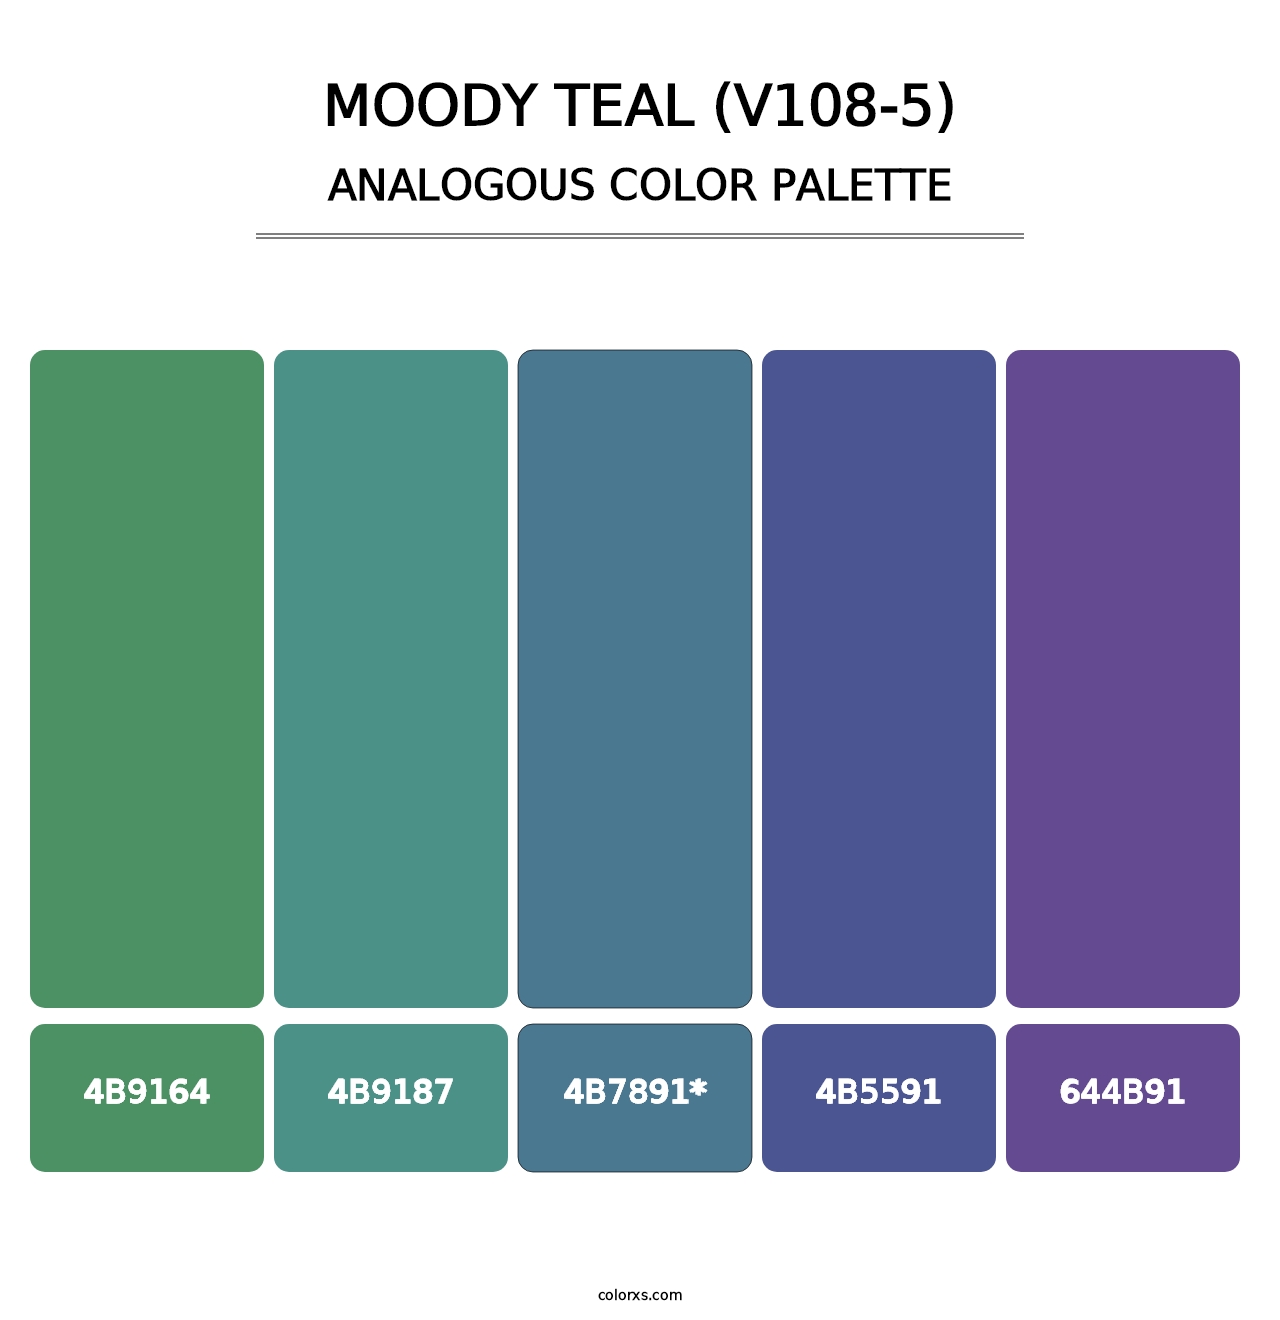 Moody Teal (V108-5) - Analogous Color Palette